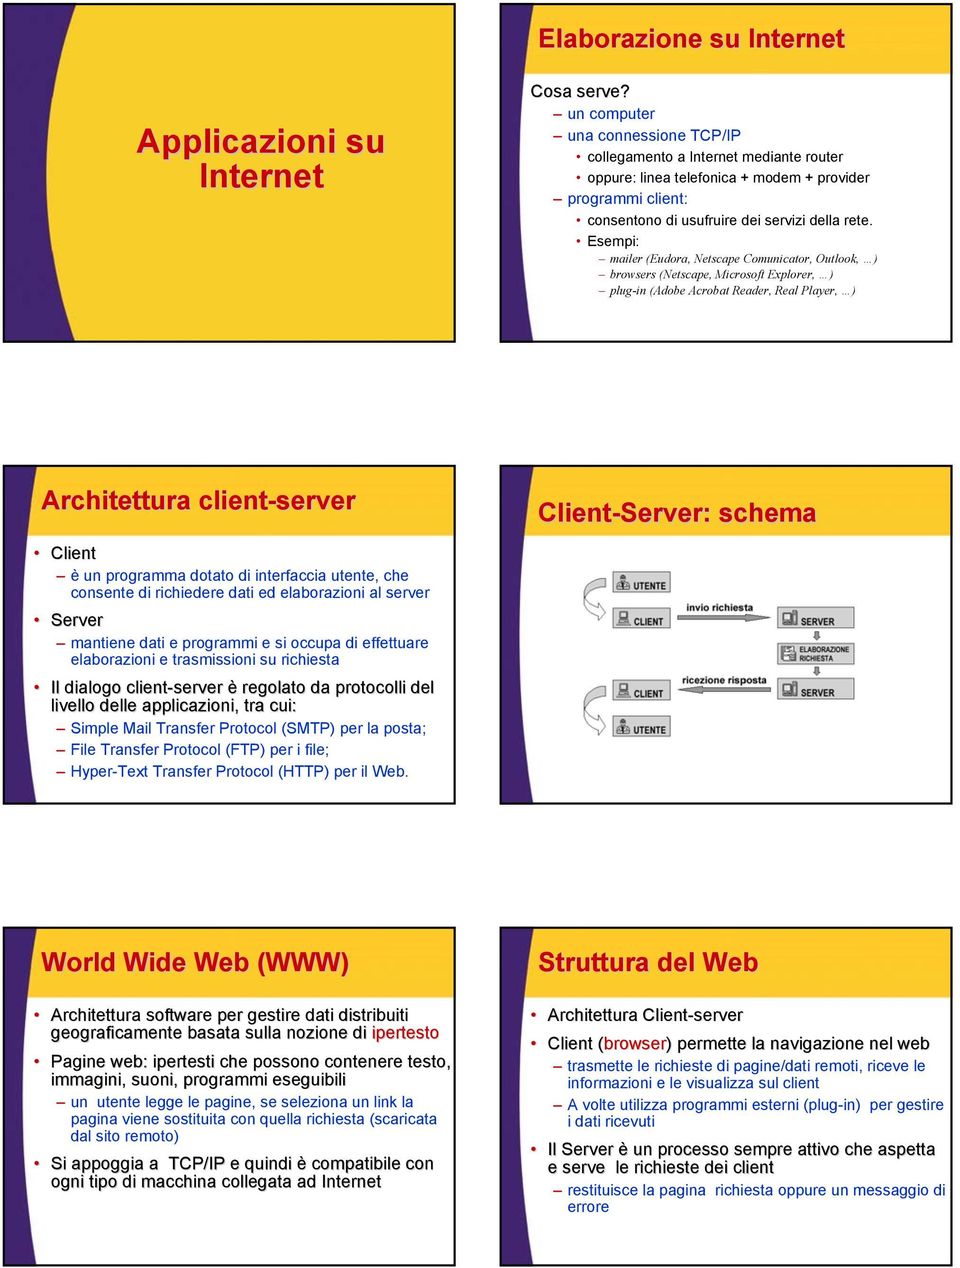 Esempi: mailer (Eudora, Netscape Comunicator, Outlook, ) browsers (Netscape, Microsoft Explorer, ) plug-in (Adobe Acrobat Reader, Real Player, ) Architettura client-server Client è un programma